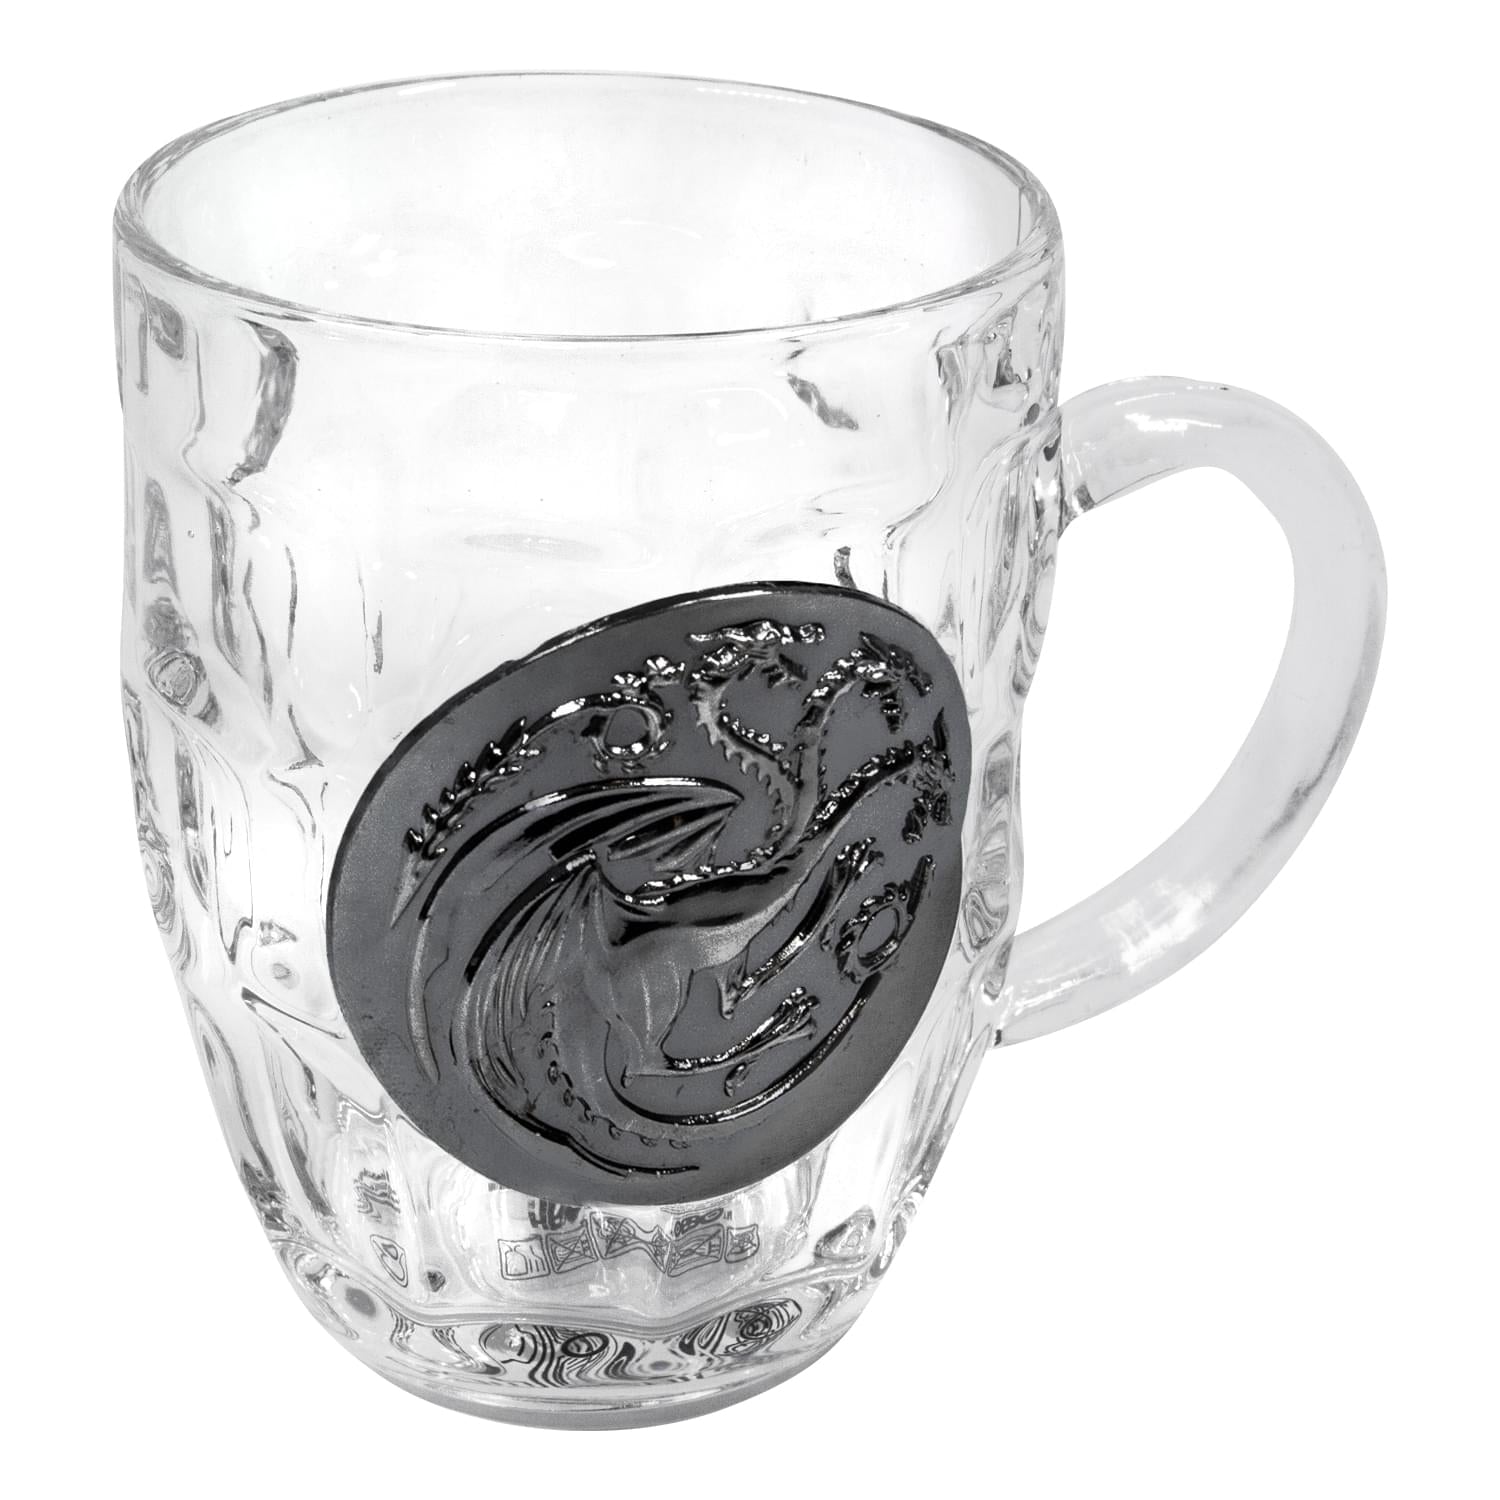 Game of Thrones House Targaryen Crystal Stein | Unique Drinking Glass | 16 Oz.